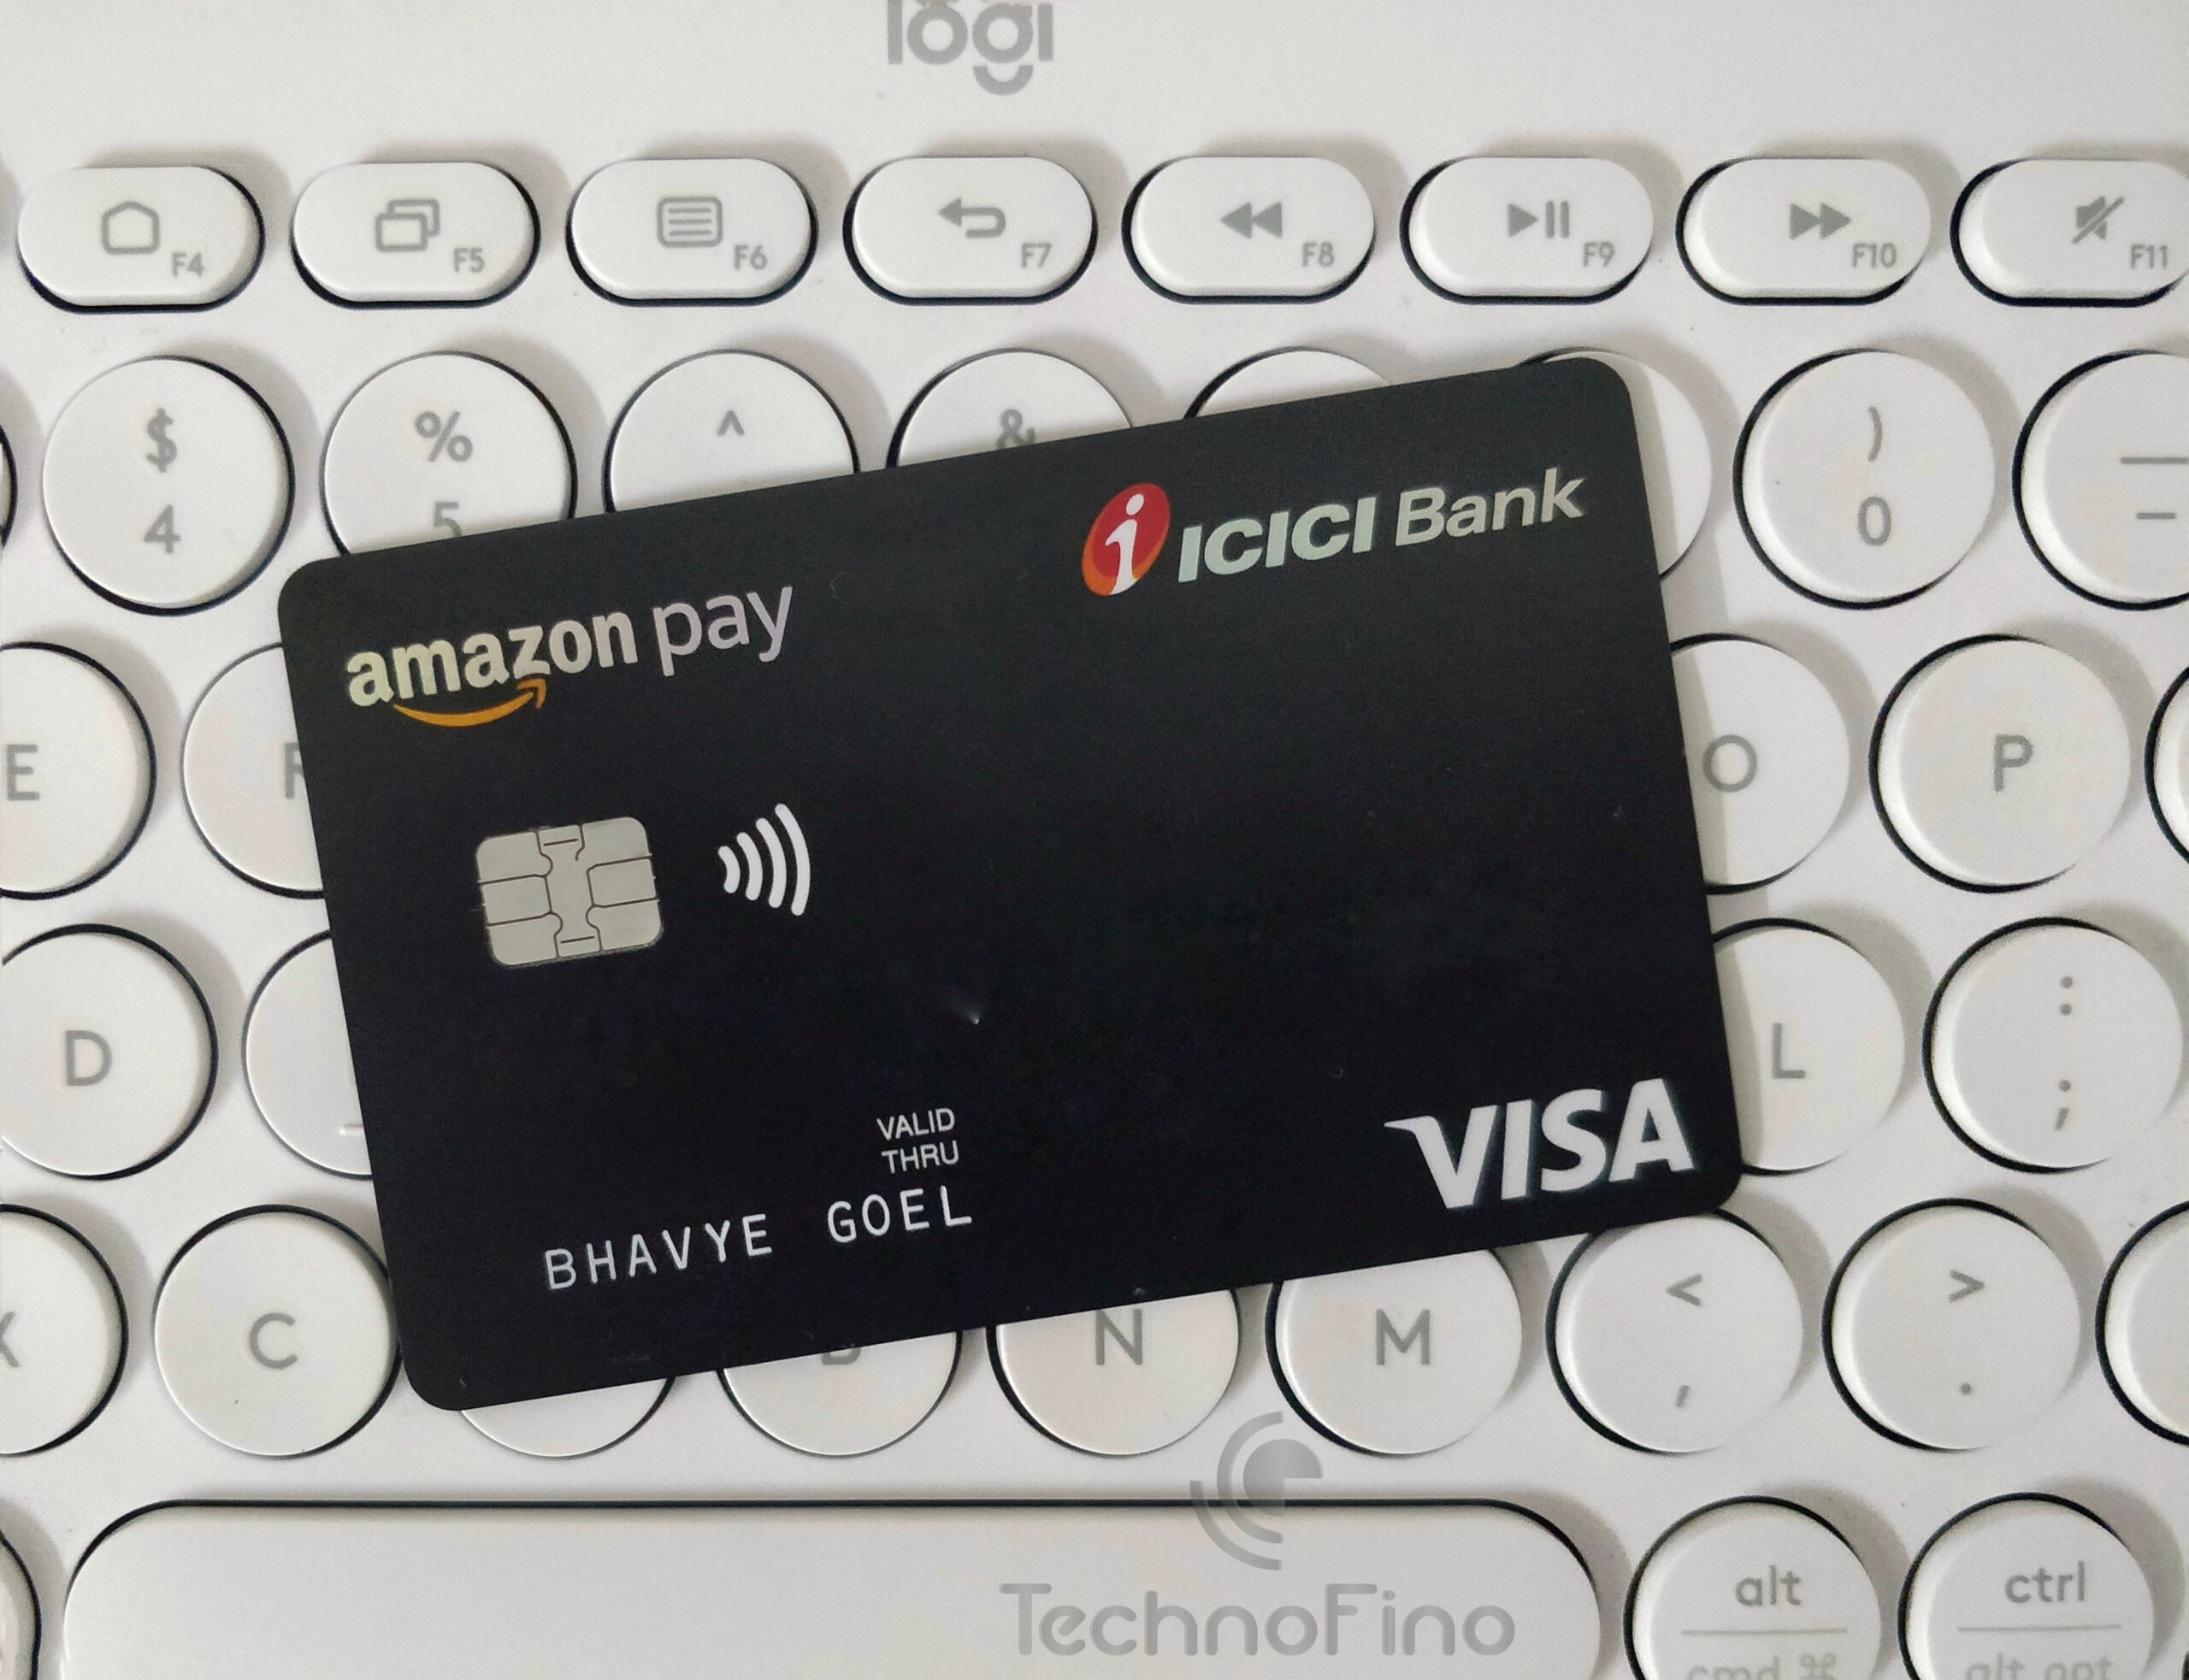 Amazon Pay ICICI Bank credit card surpasses two million customers, ET BFSI